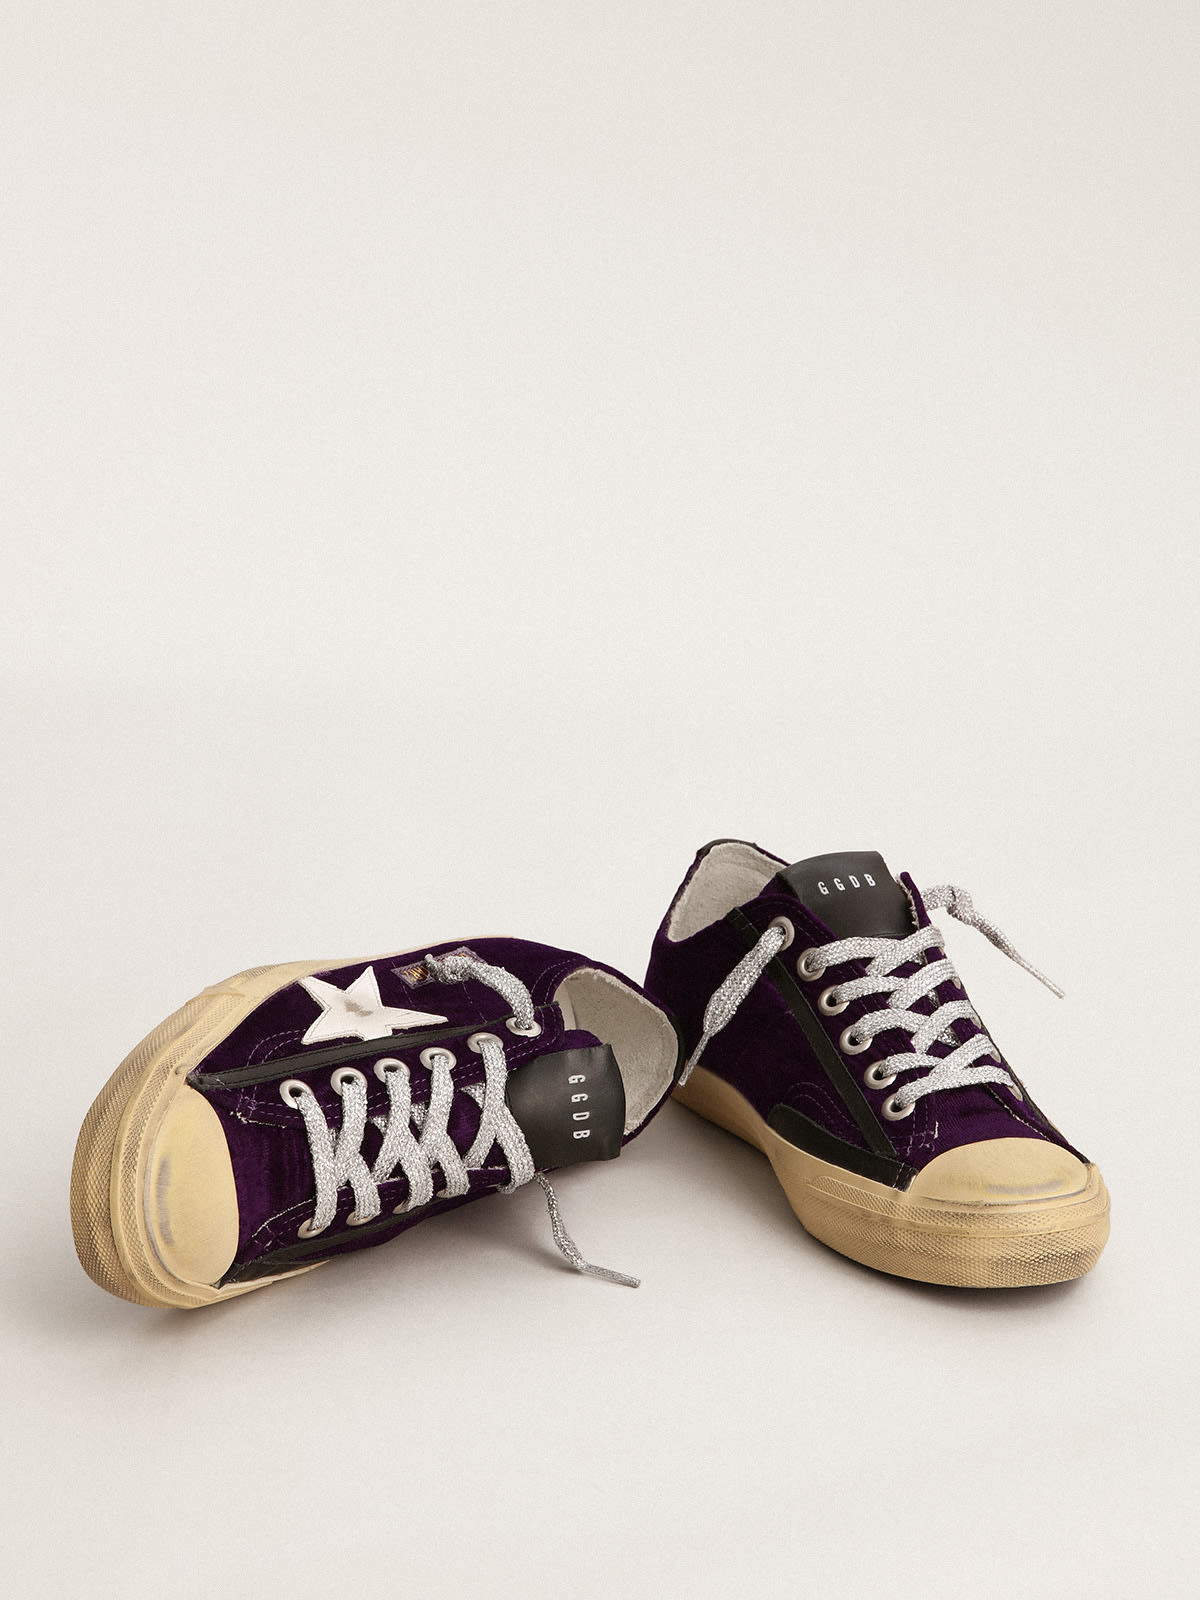 Golden Goose - V-star LTD sneakers in purple velvet with a white leather star in 